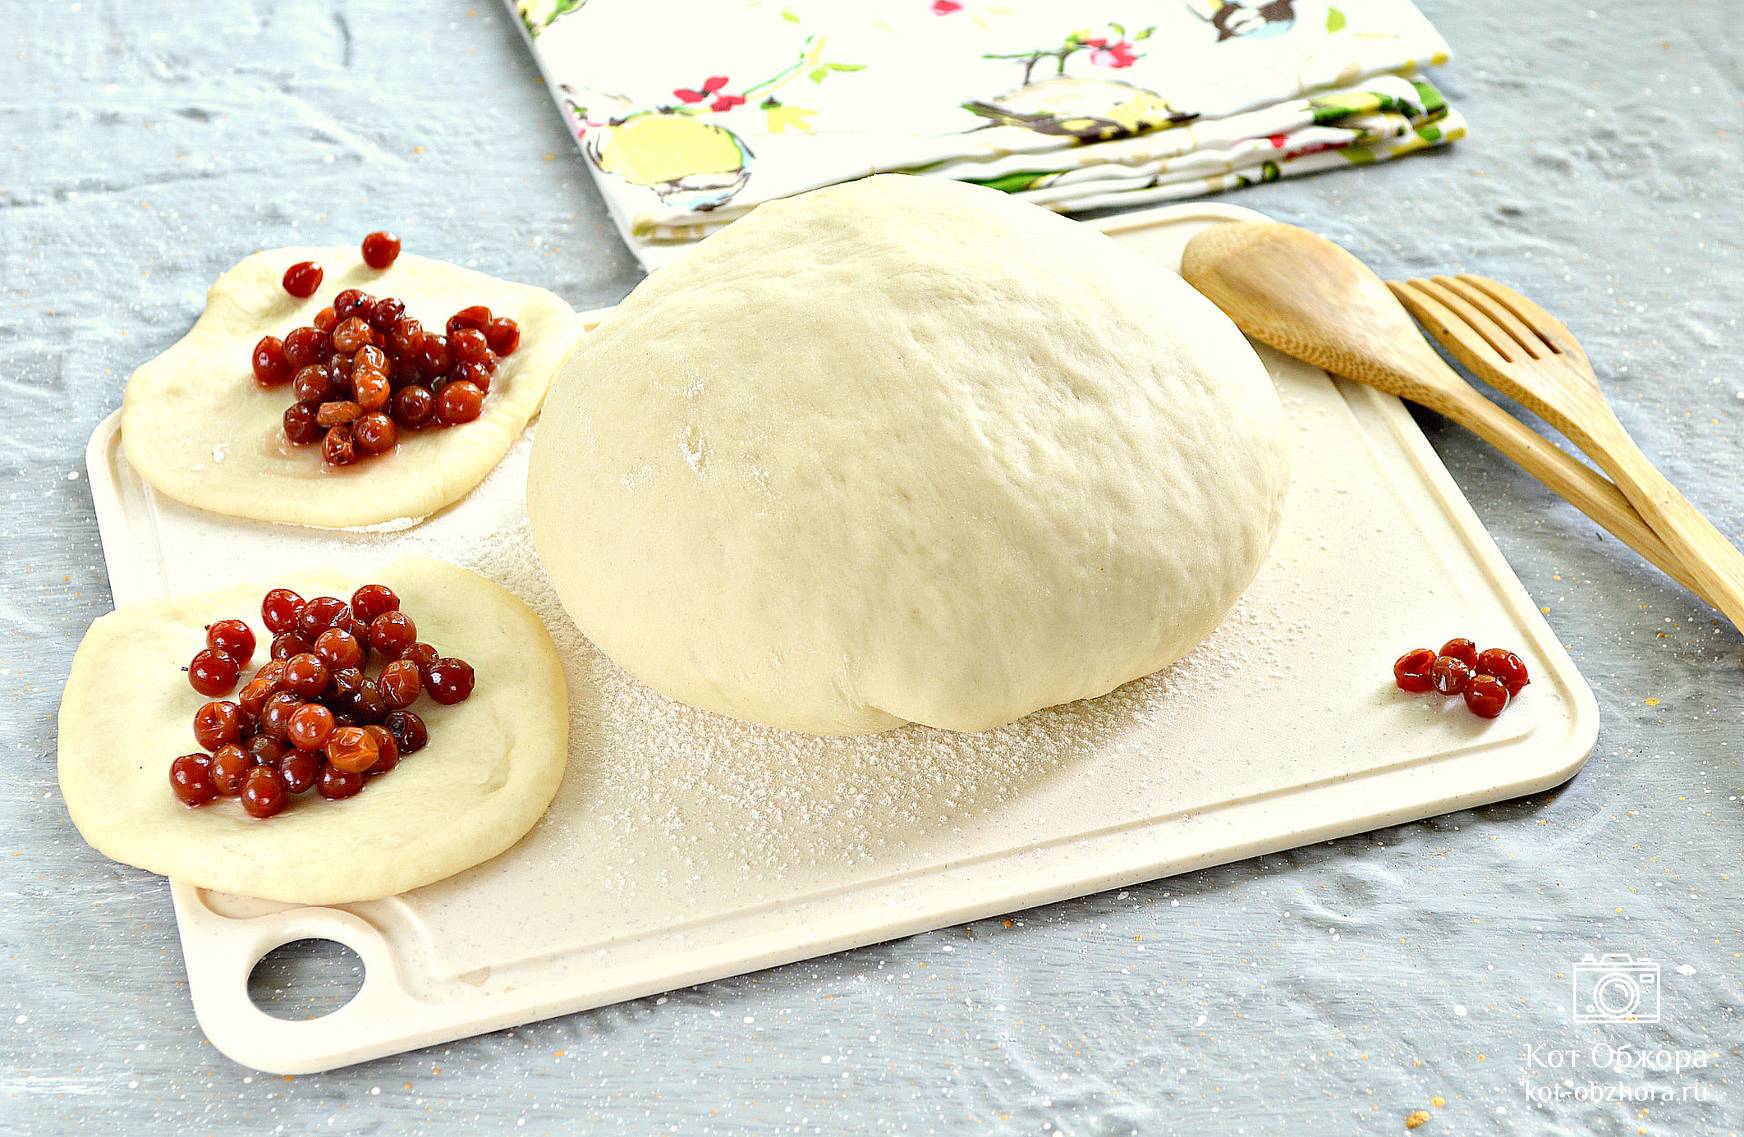 Дрожжевое тесто для булочек на кефире с сухими дрожжами рецепт с фото